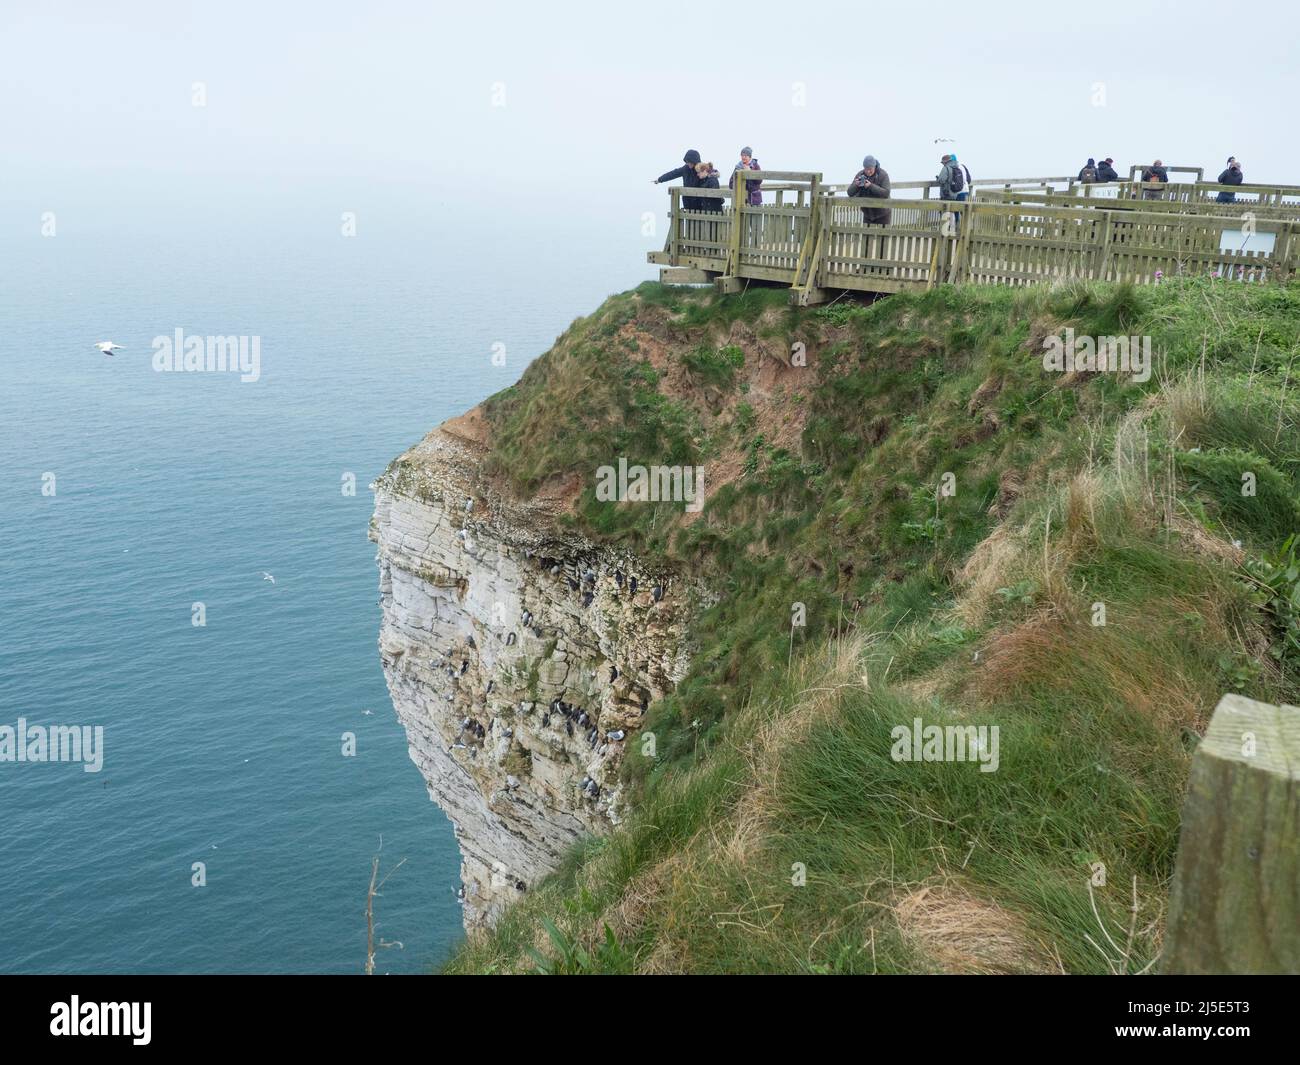 Visitors, tourists, bird-watchers at Bempton cliffs Yorkshire. UK Stock Photo